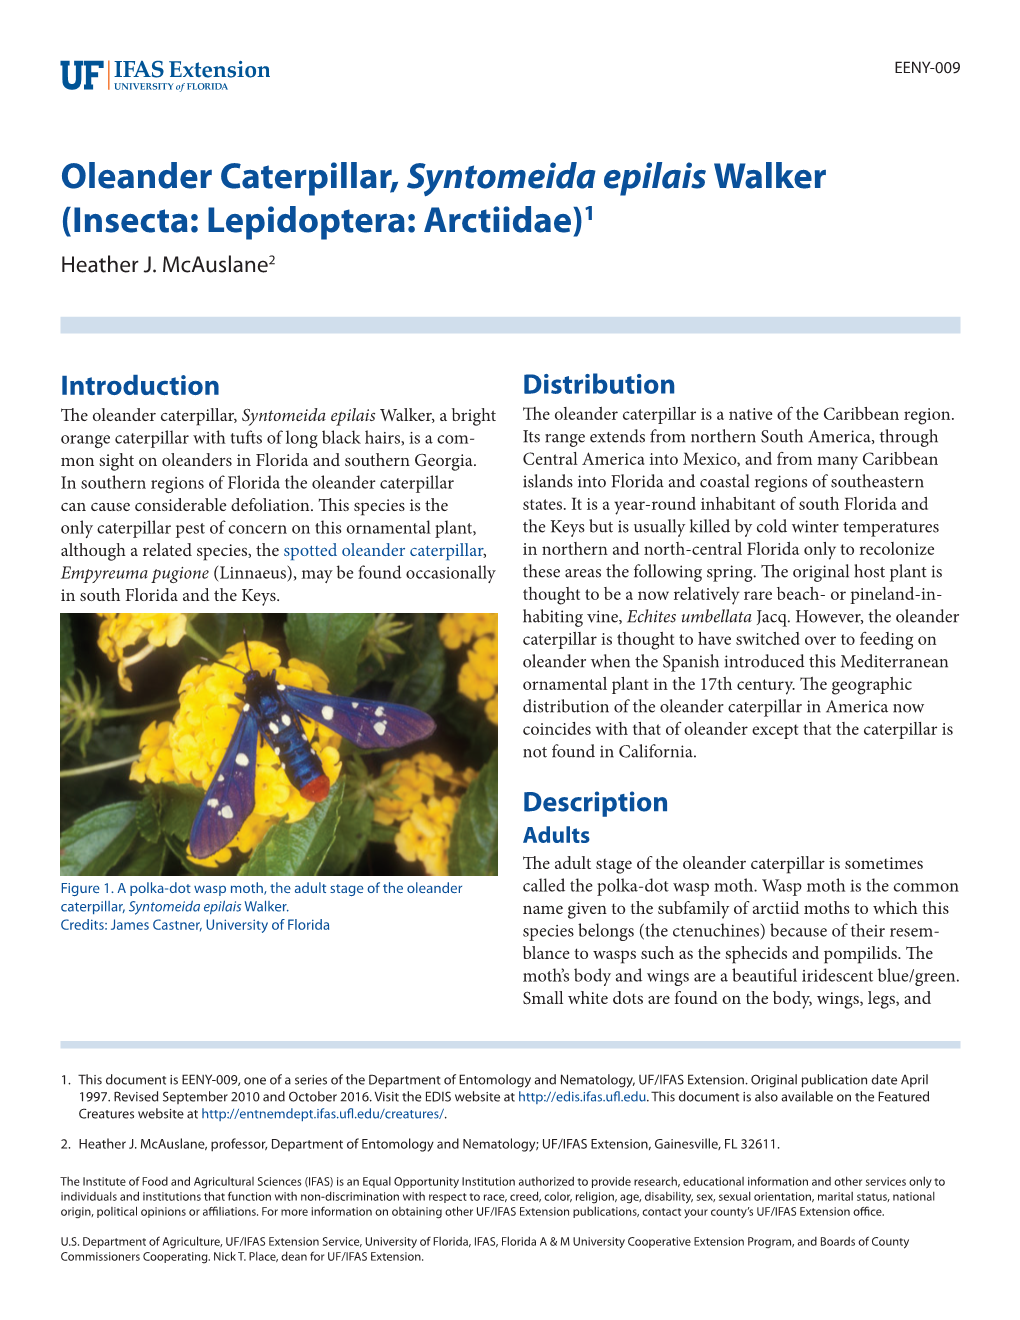 Oleander Caterpillar, Syntomeida Epilais Walker (Insecta: Lepidoptera: Arctiidae)1 Heather J